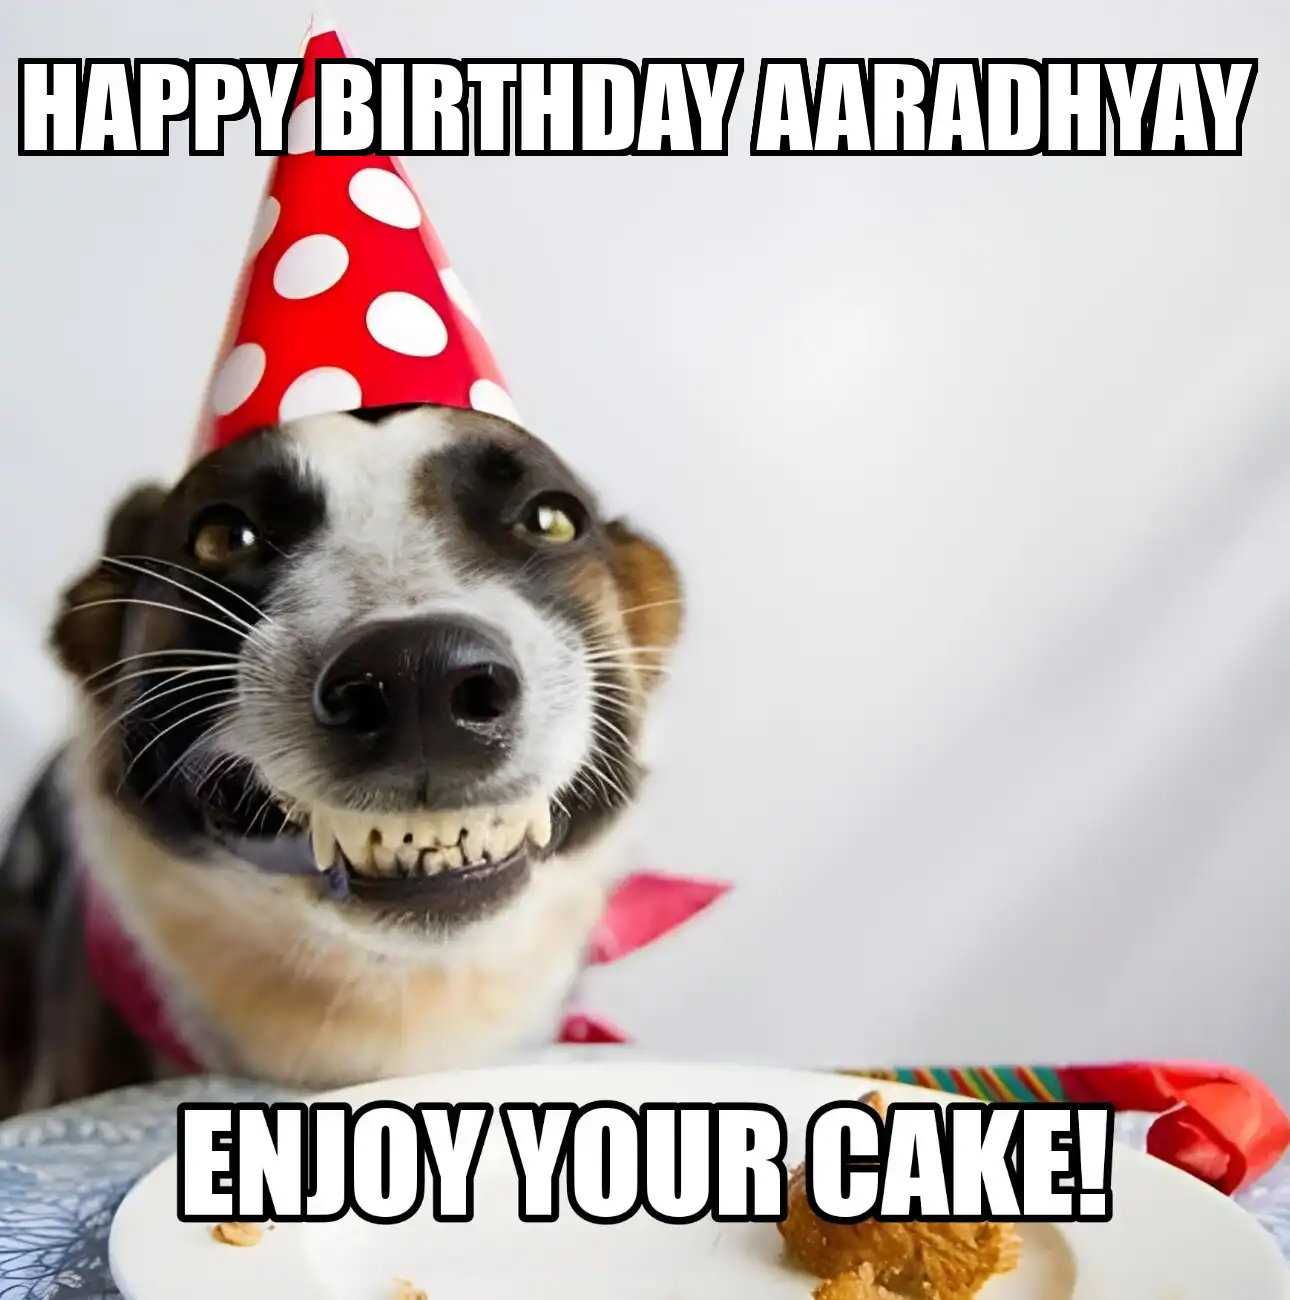 Happy Birthday Aaradhyay Enjoy Your Cake Dog Meme